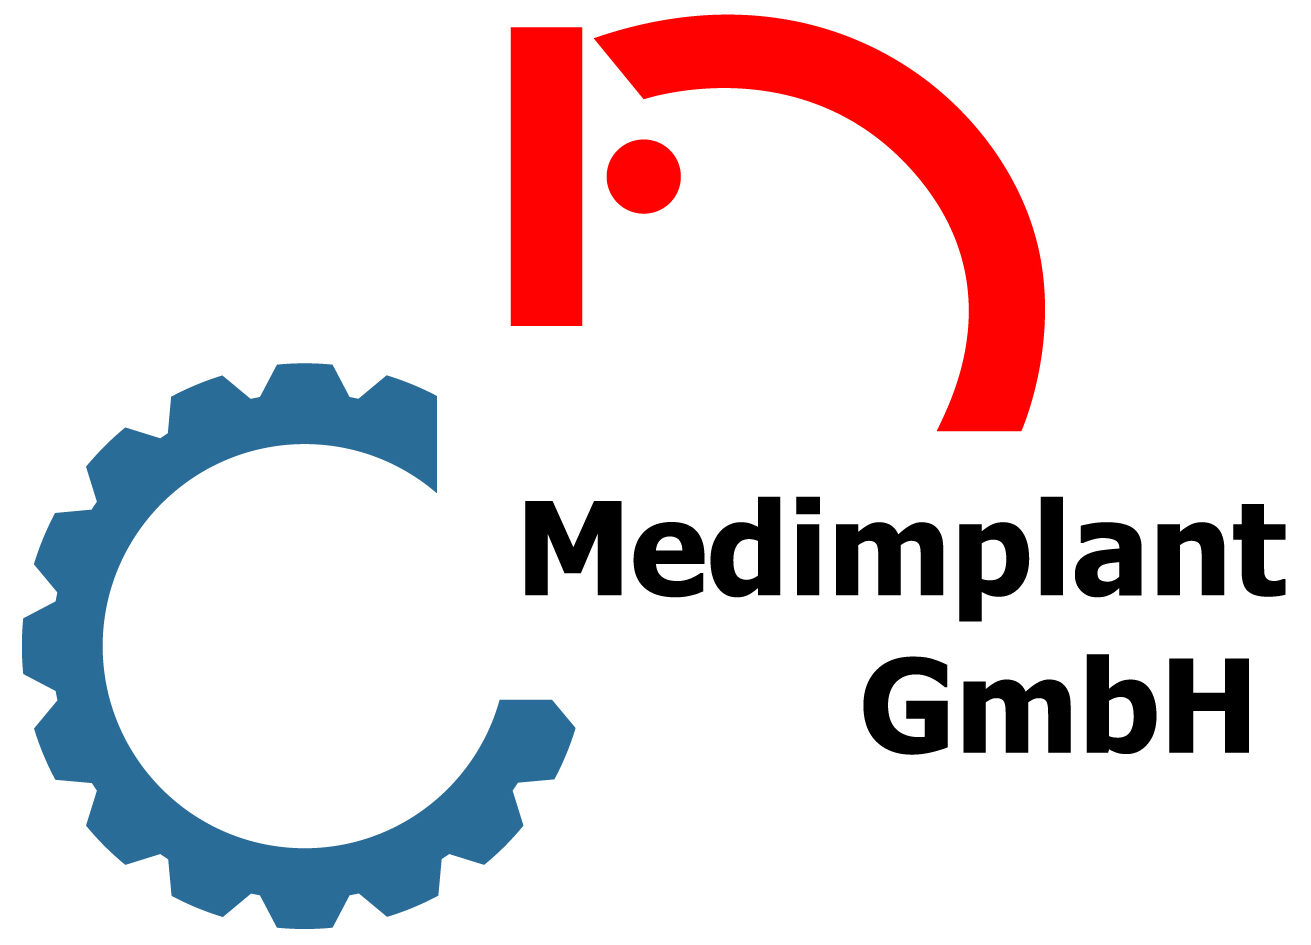 Medimplant GmbH